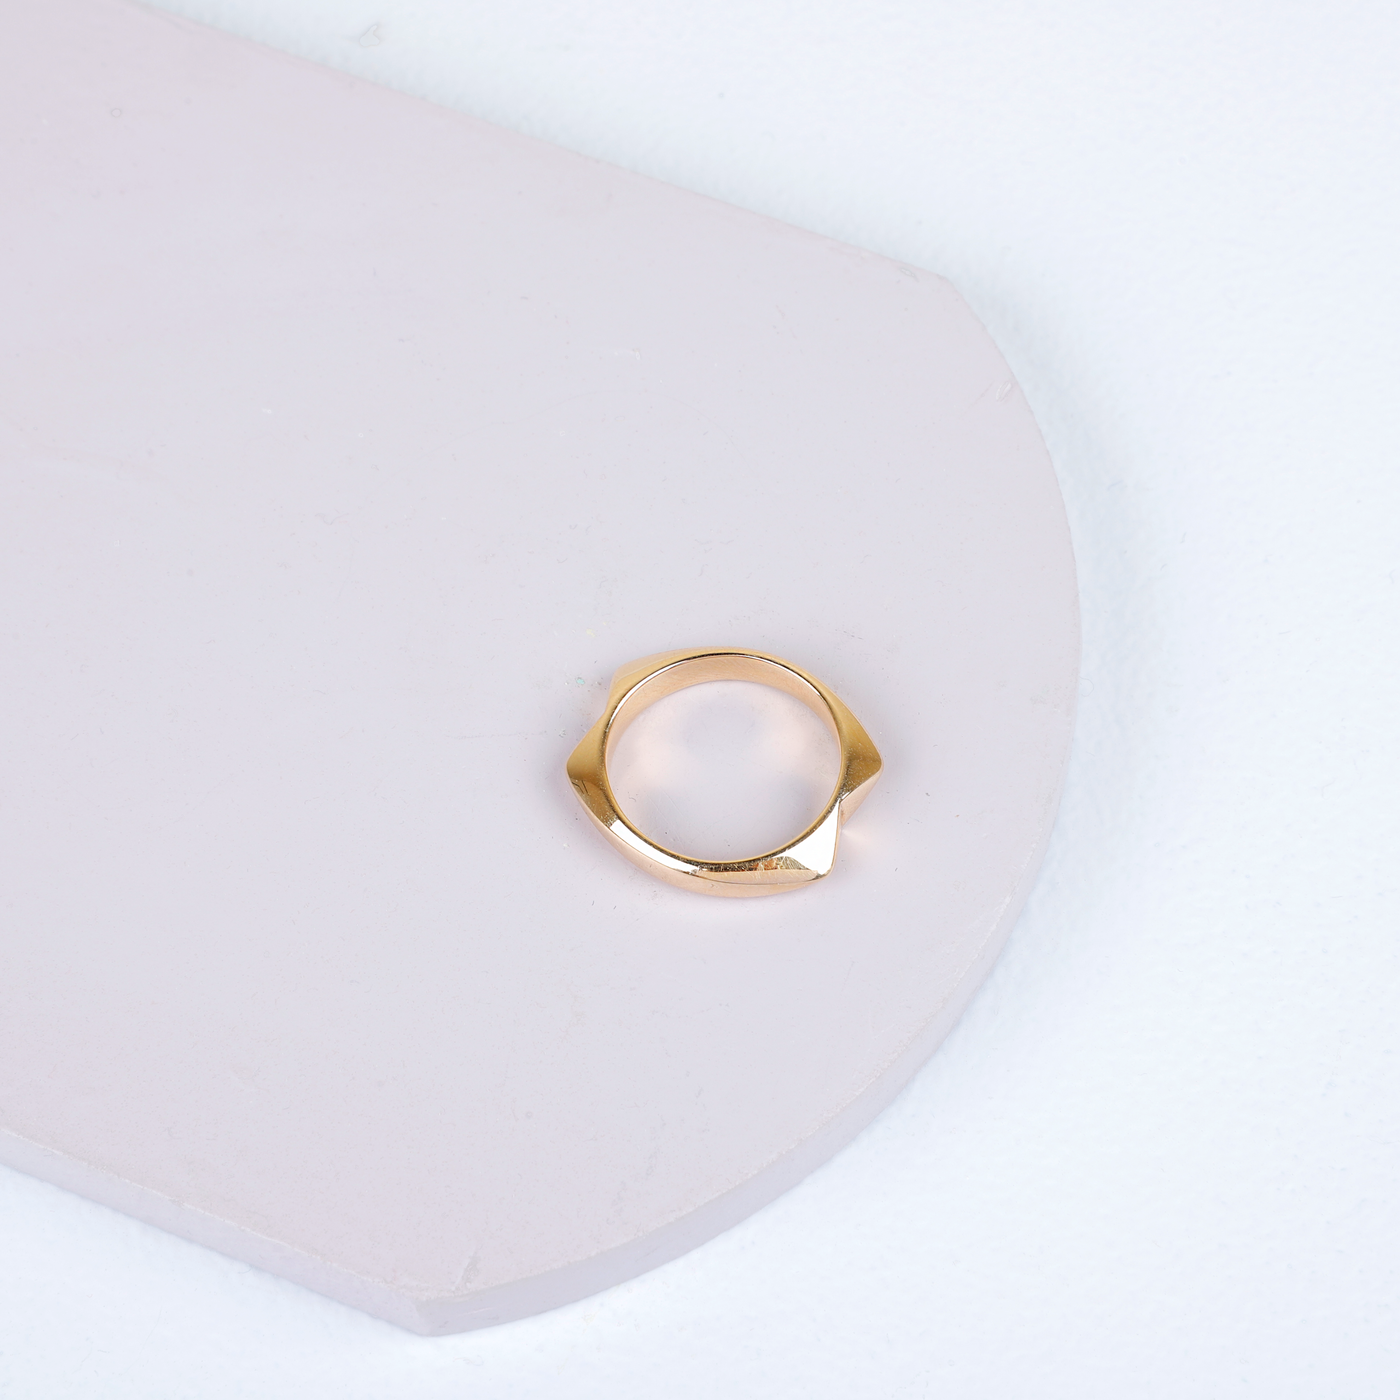 Gold Convex Ring by Adi Handmade